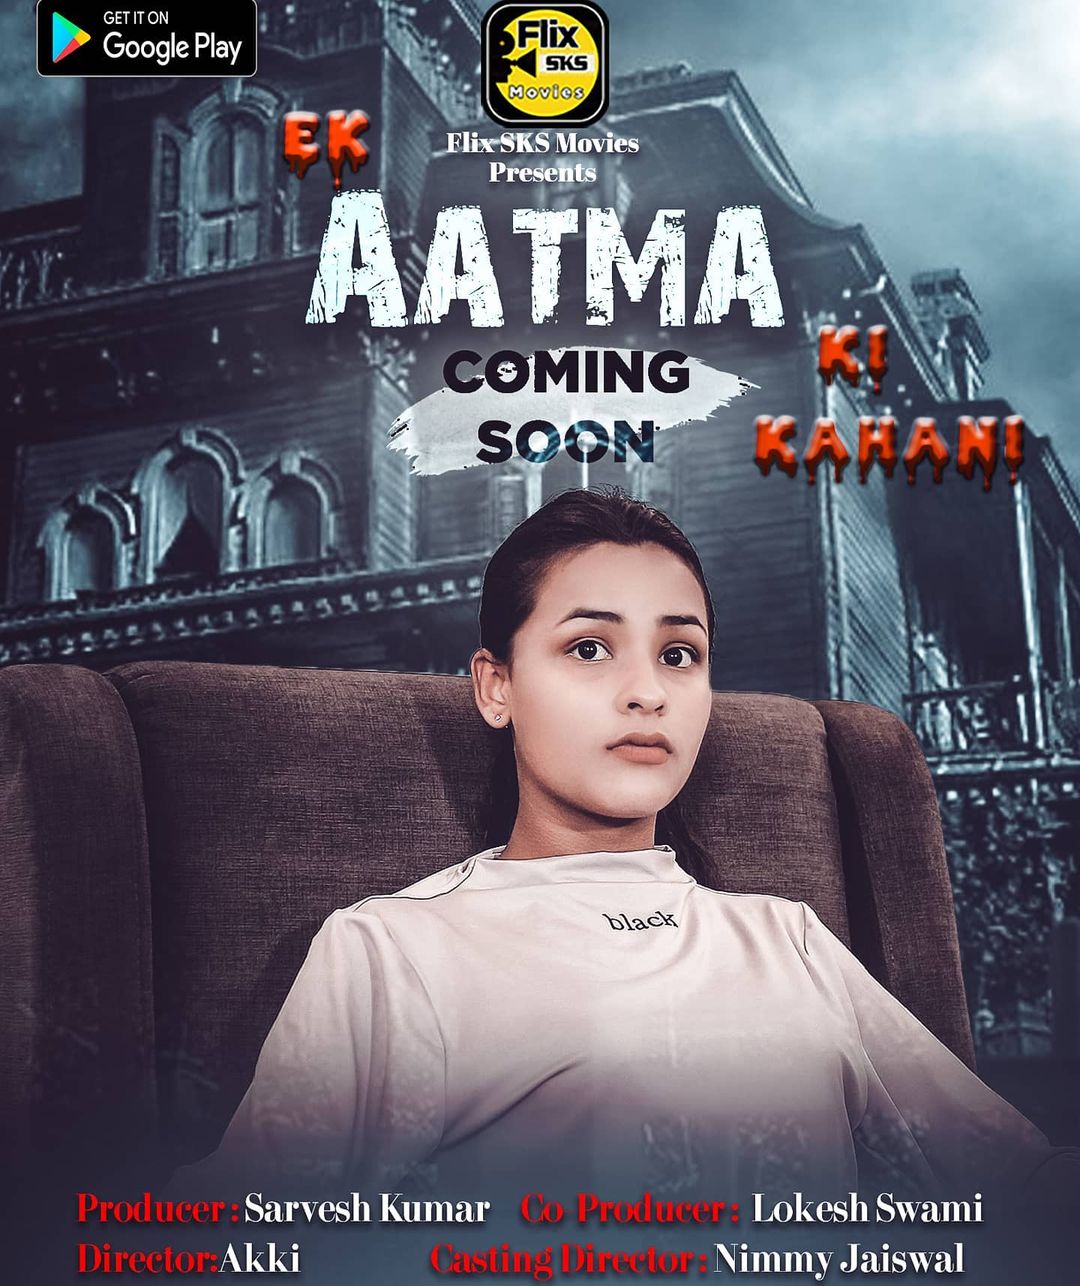 You are currently viewing Ek Aatma Ki Kahani 2020 FlixSKSMovies Hindi S01E01 Hot Web Series 720p HDRip 150MB Download & Watch Online